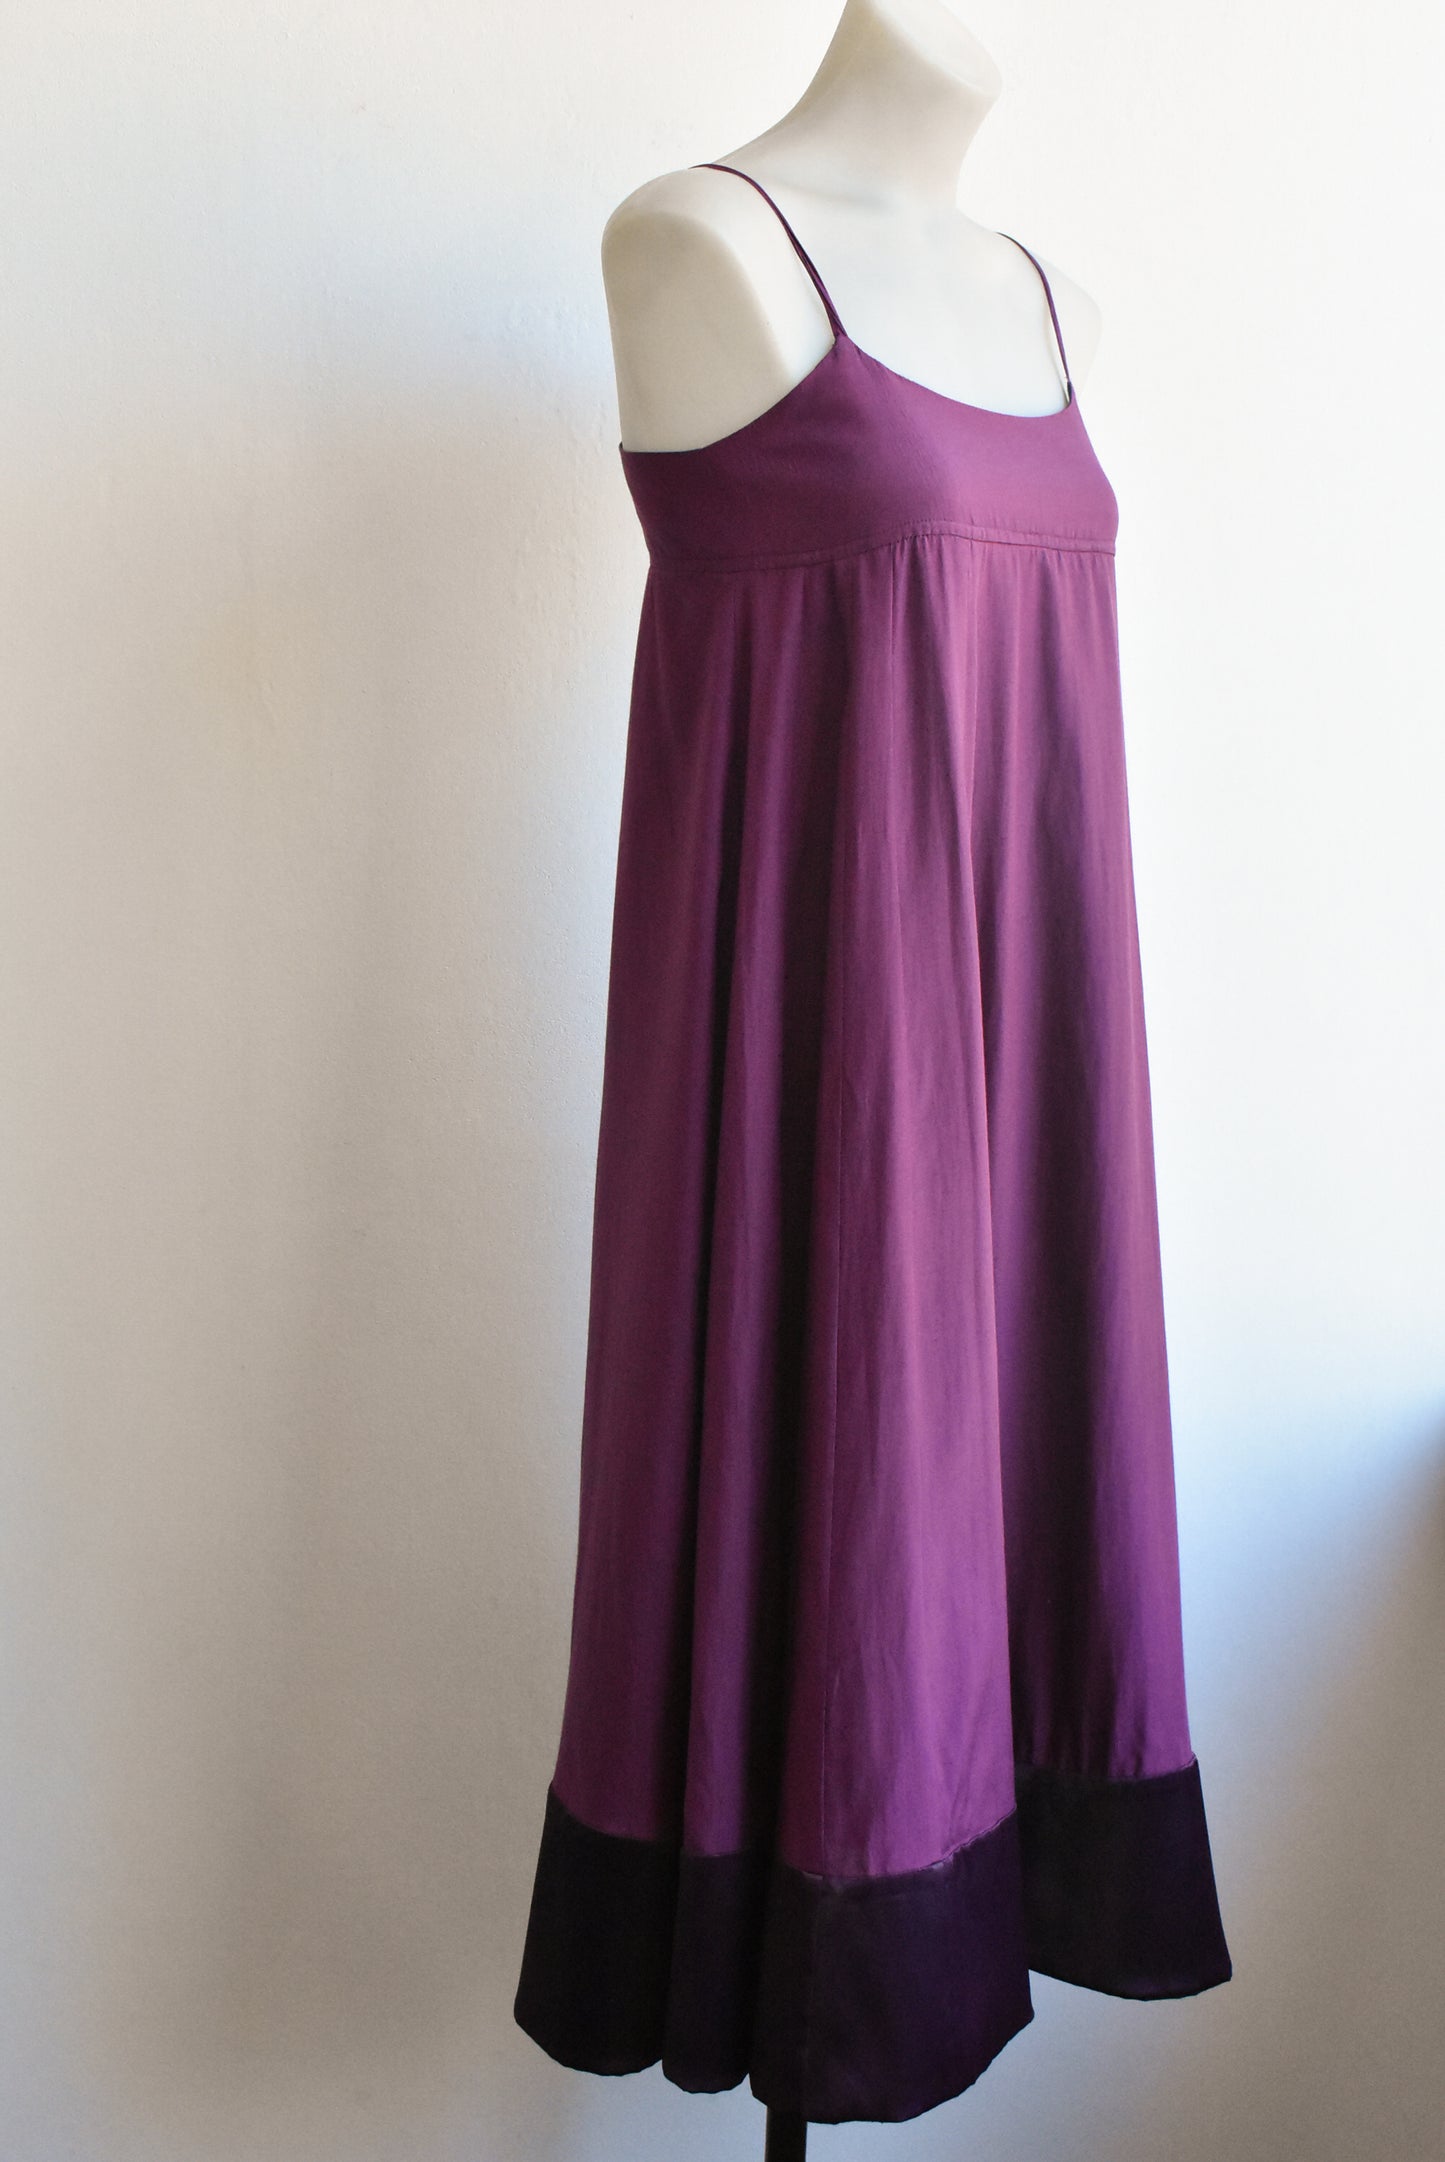 Charmaine Reveley silk-blend purple dress, size 10